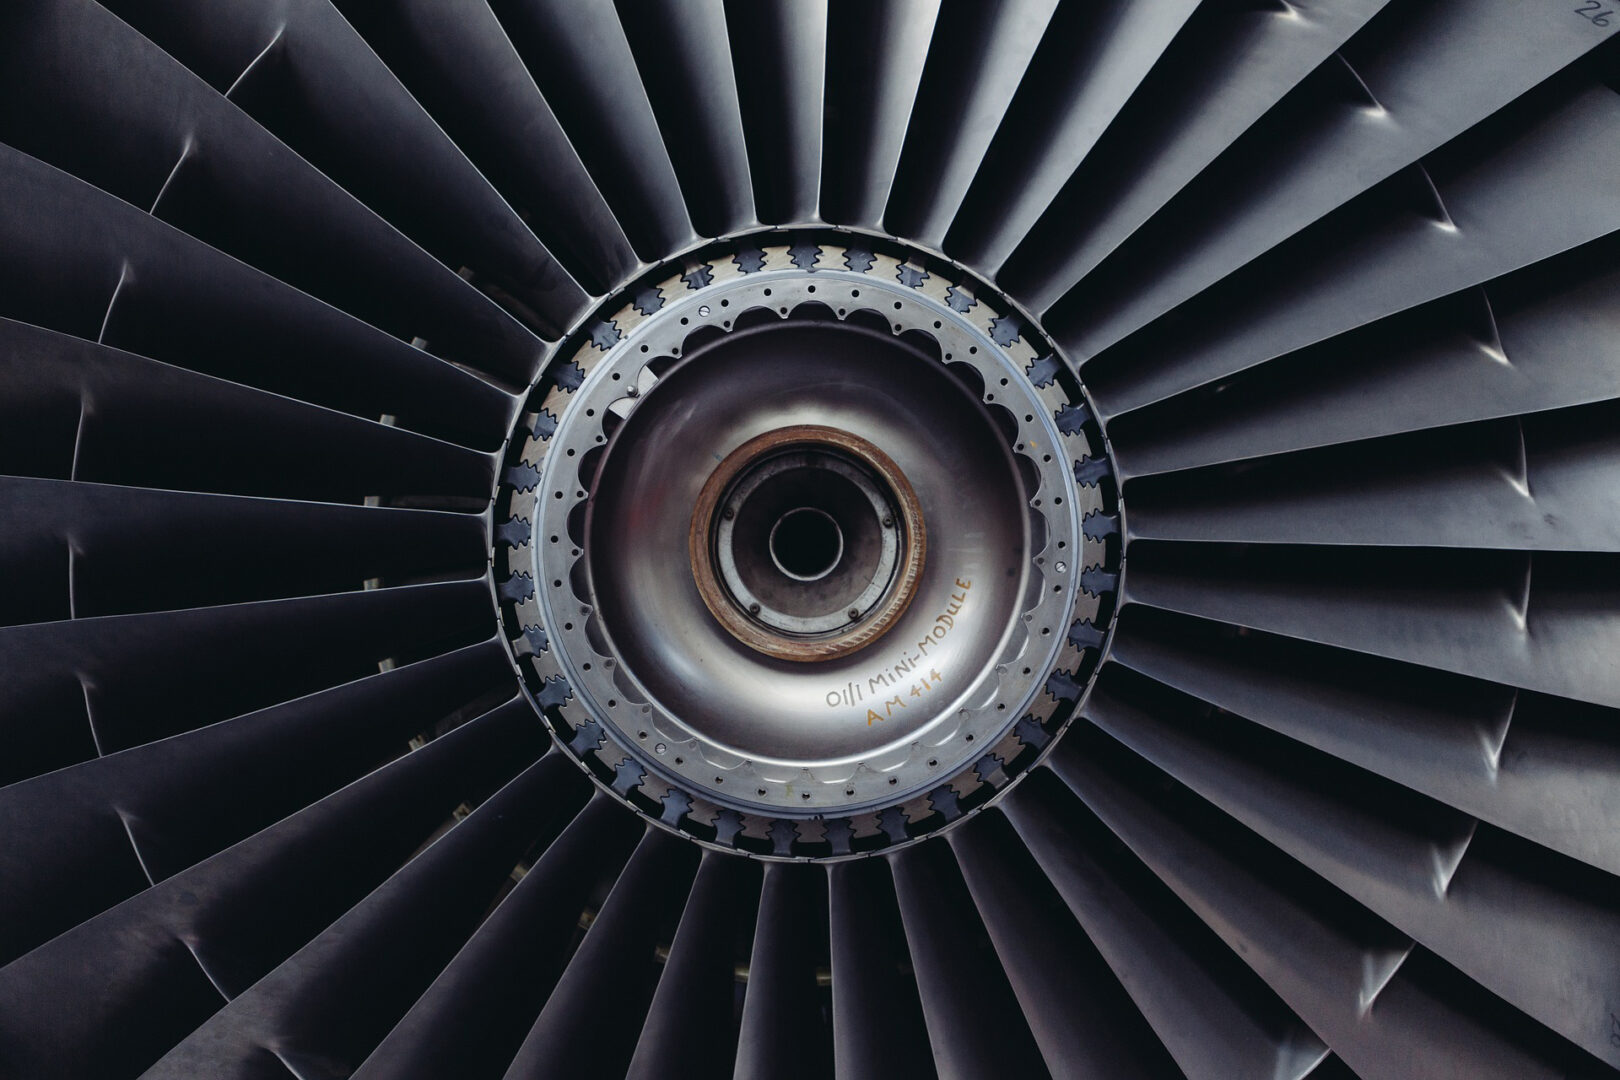 gas turbine engine in aircraft